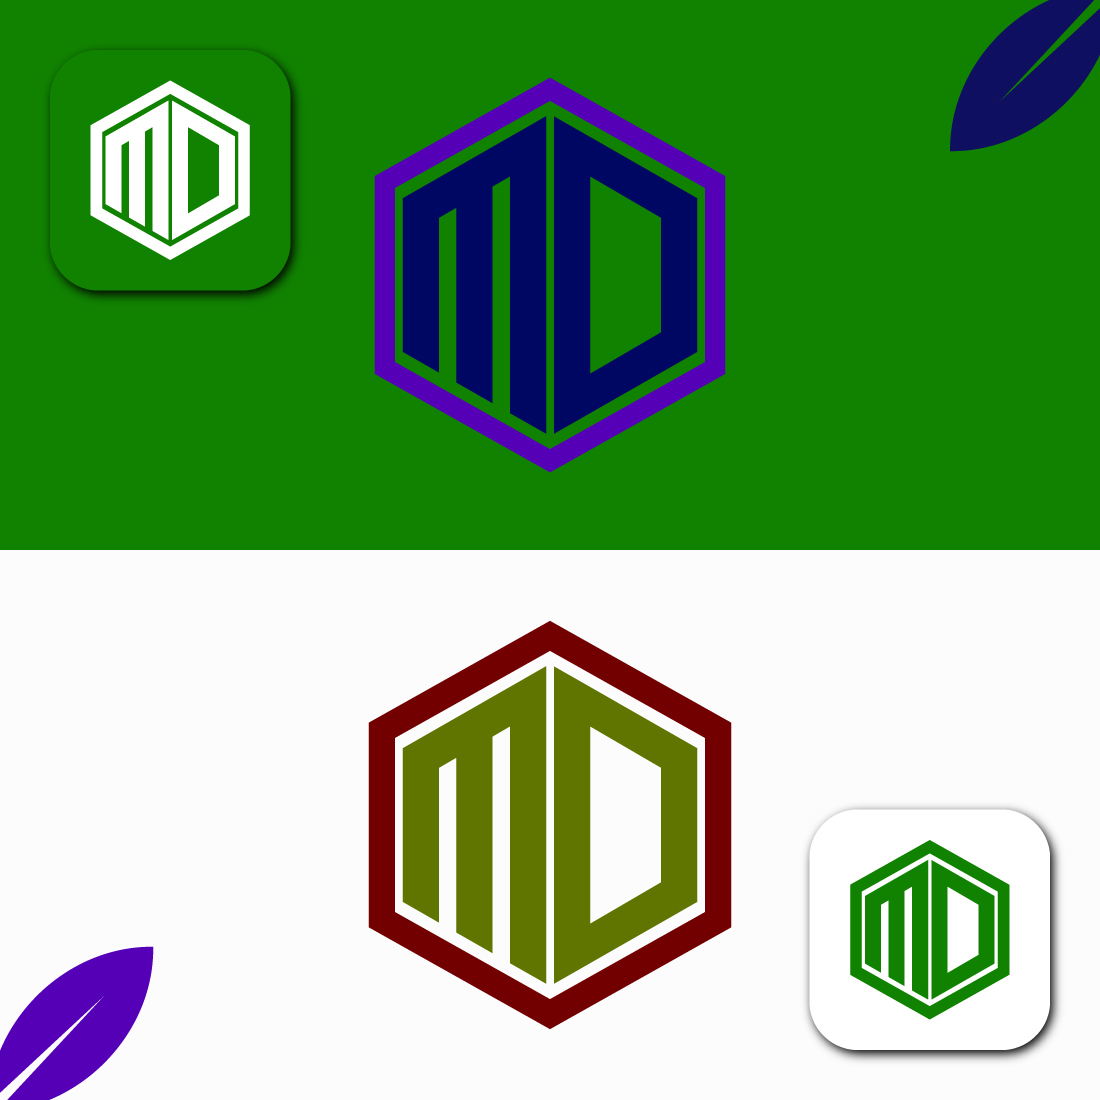 MD Logo Design cover image.